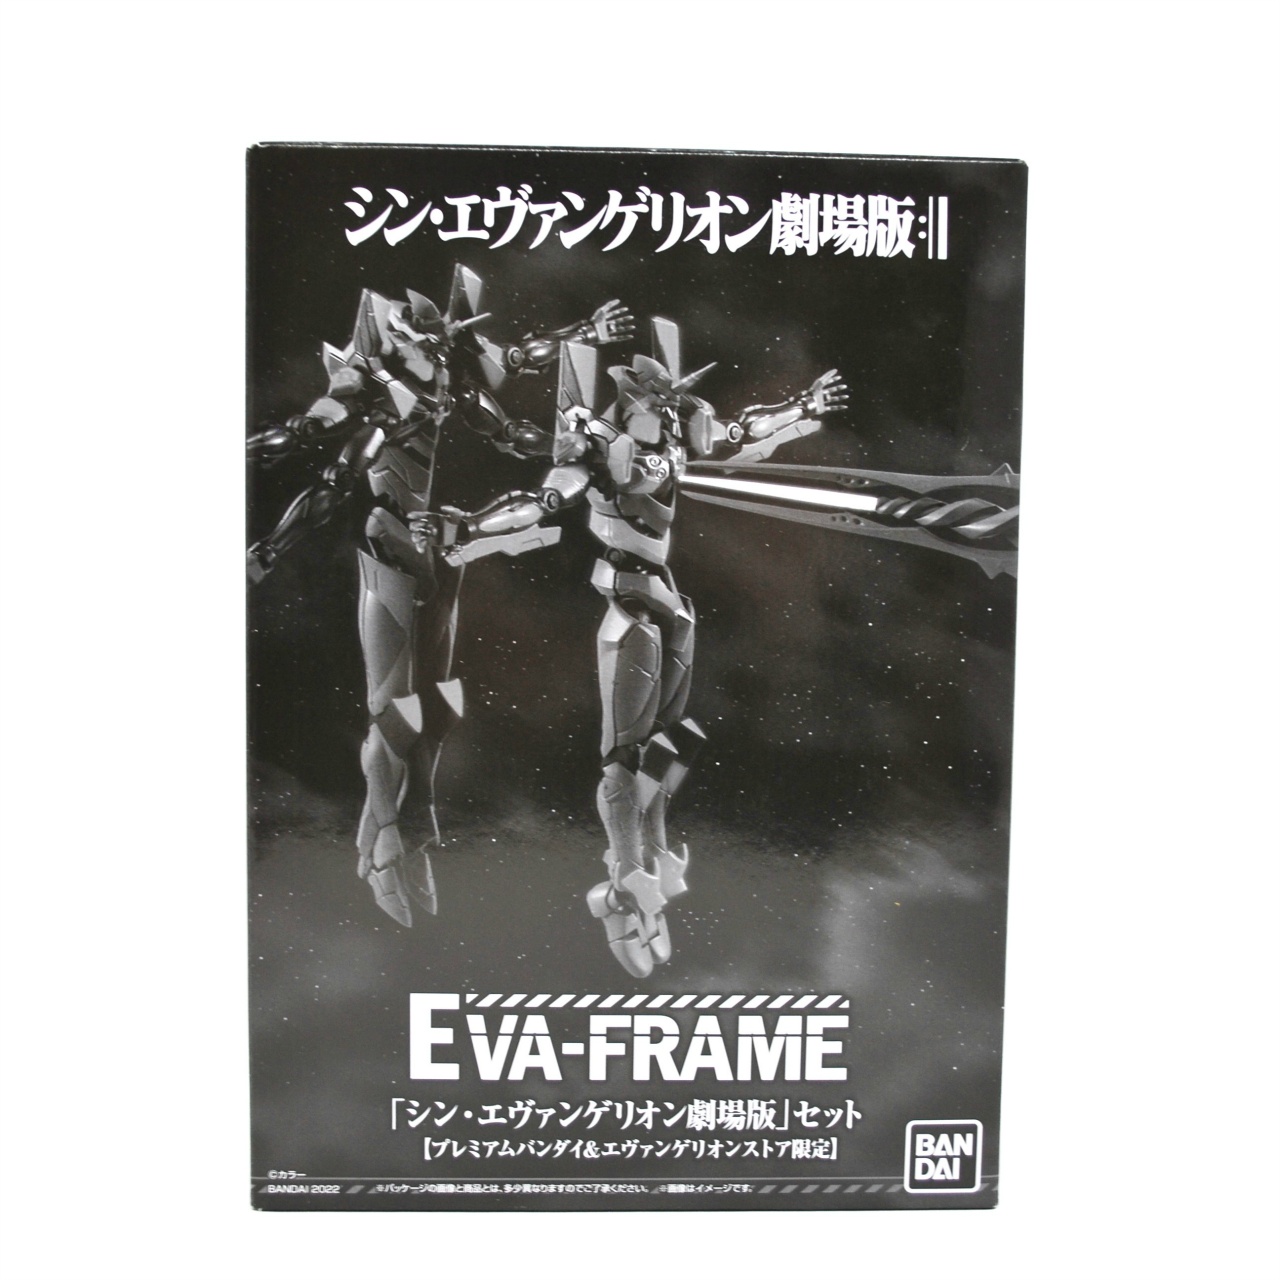 EVA-FRAME Shin Evangelion Movie Set Preban Eva Store Limited